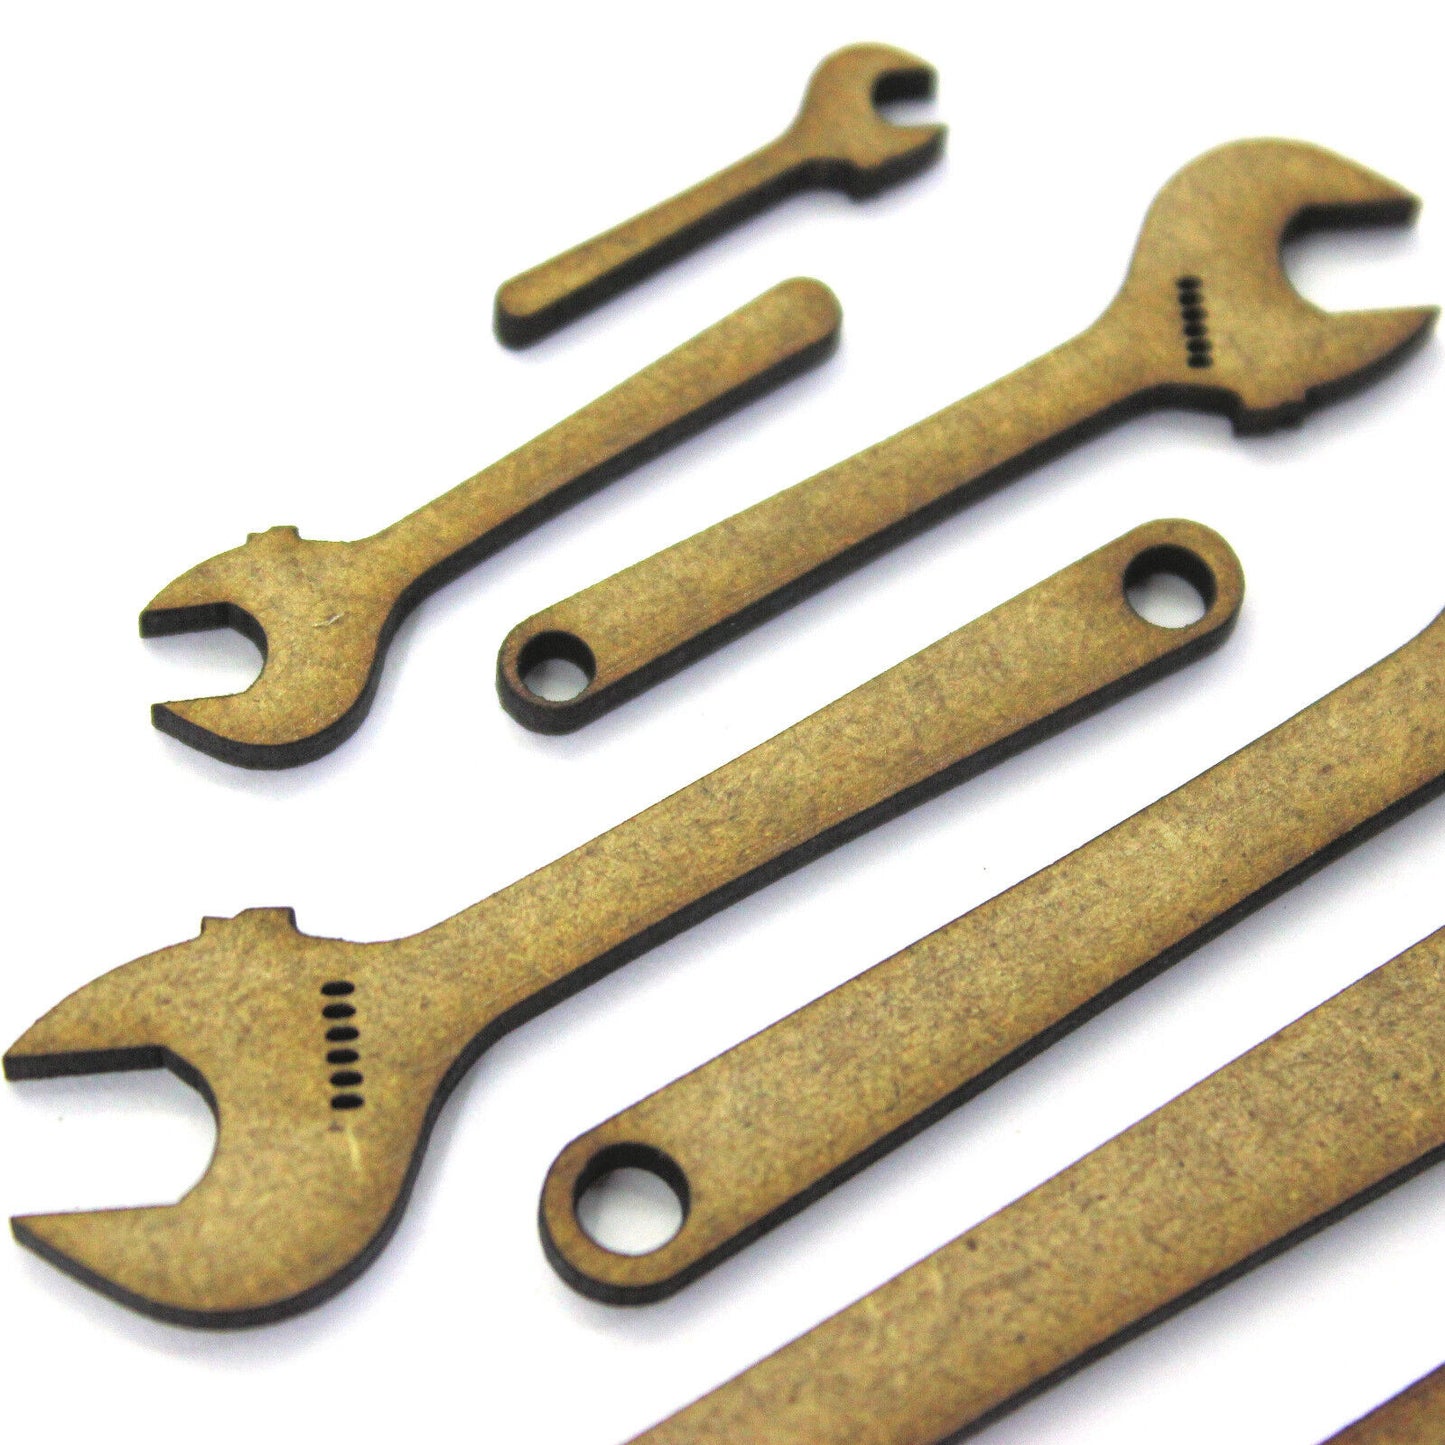 Adjustable Spanner Craft Shapes, Embellishments, 2mm MDF Tool crescent wrench